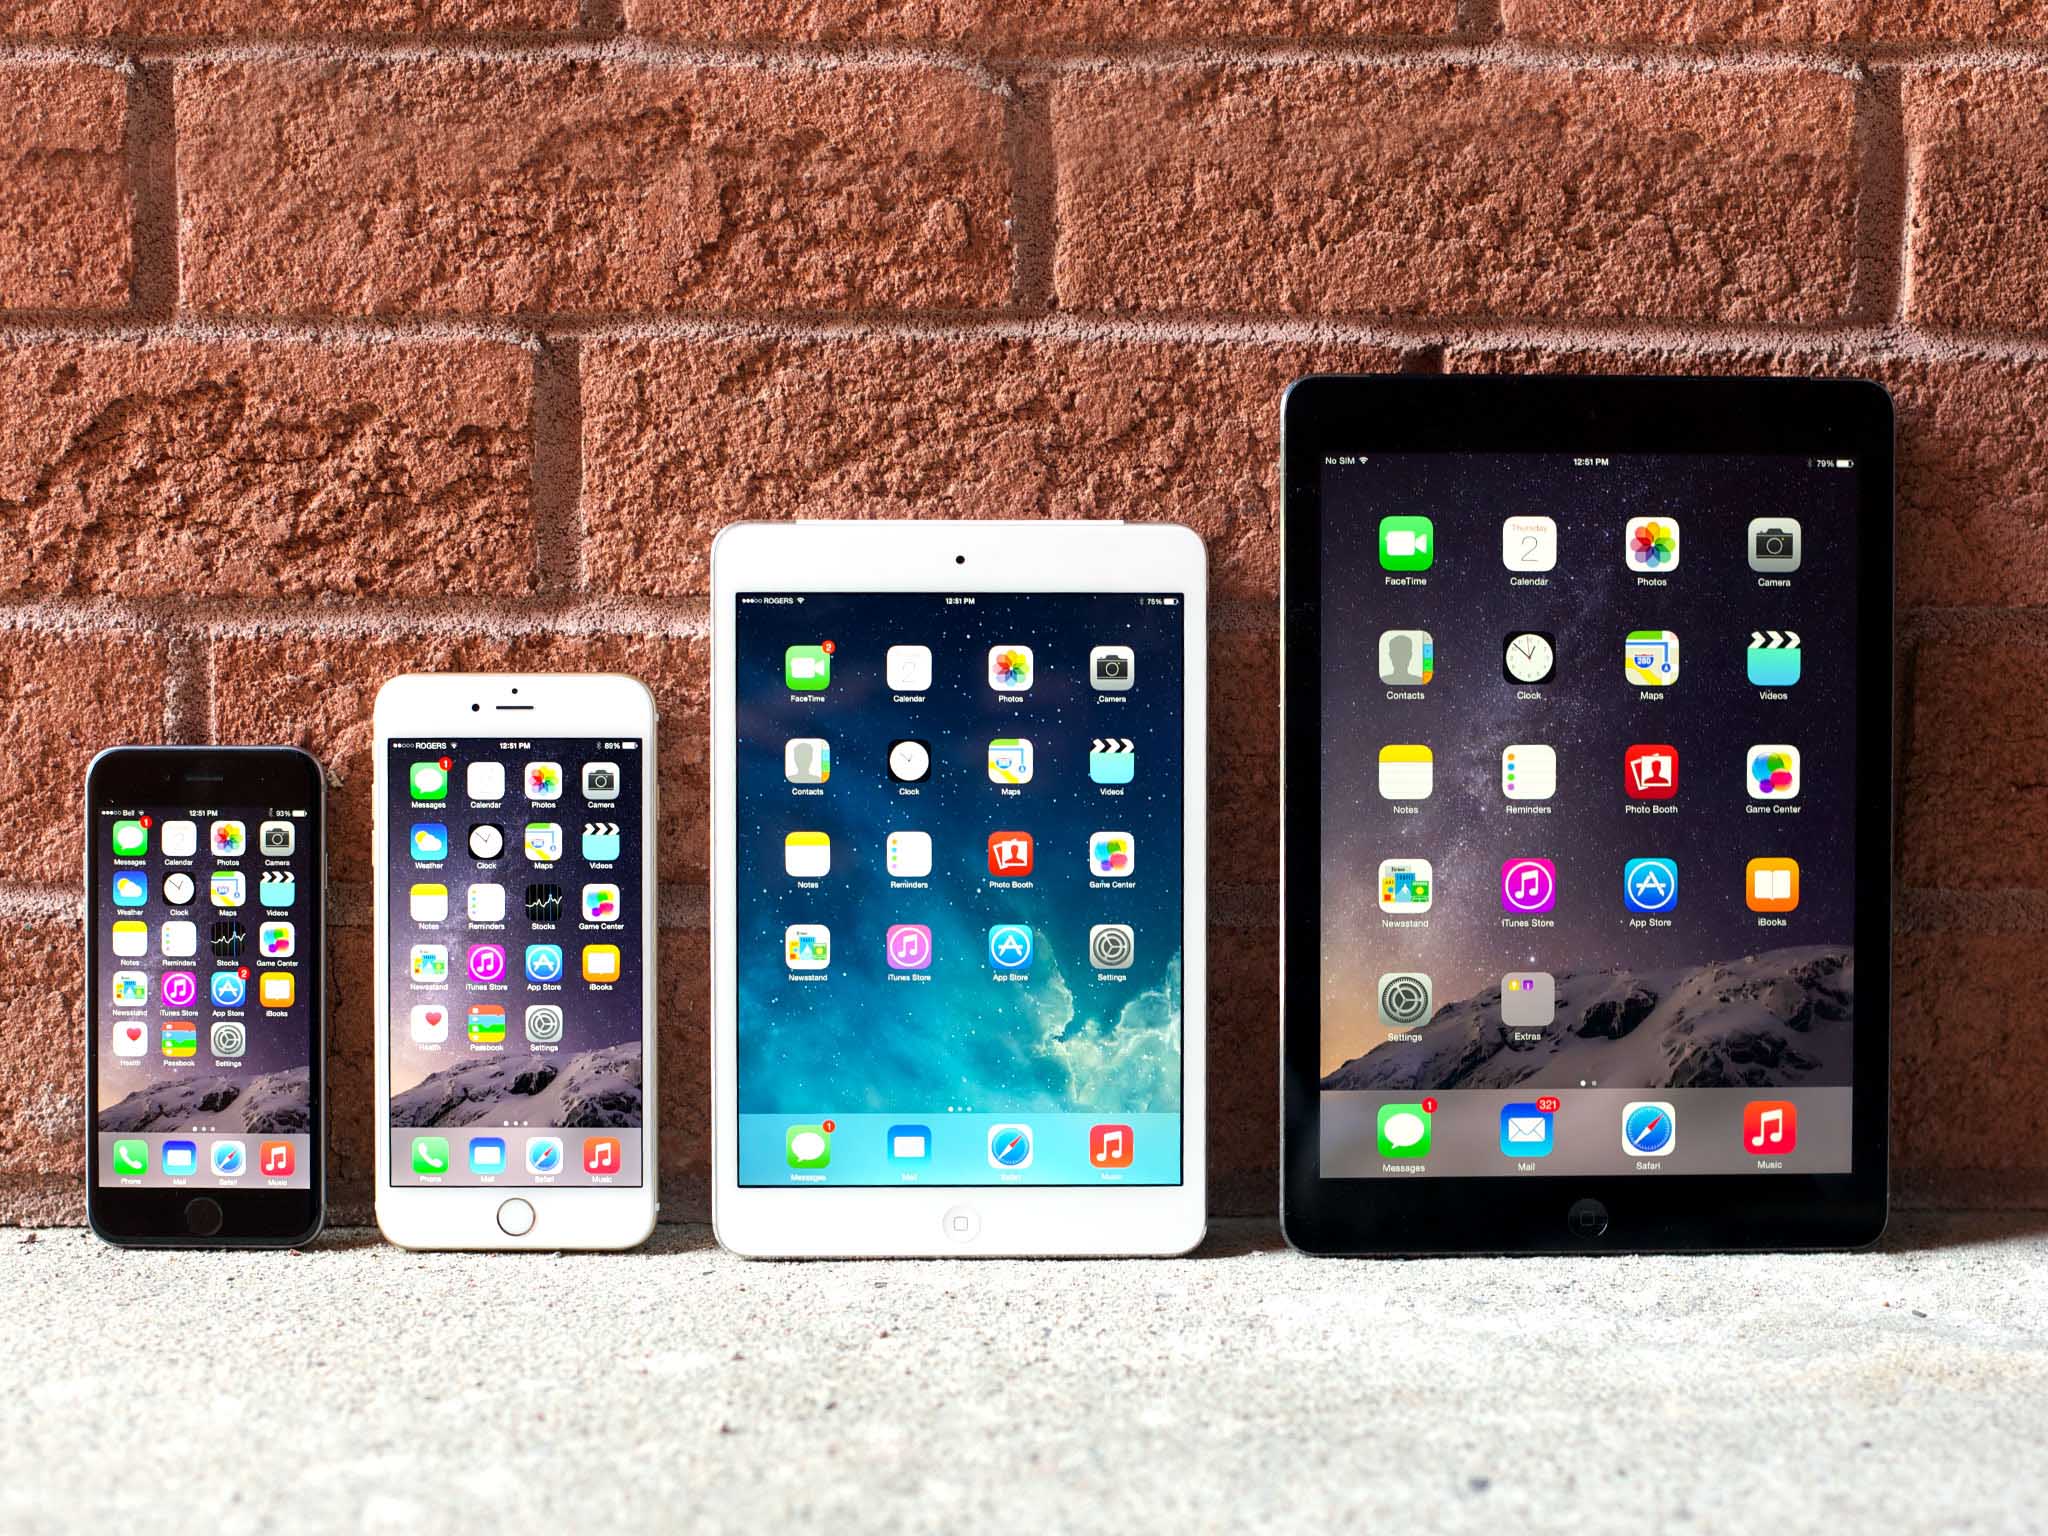 iPhone 6, iPhone 6 plus, iPad mini, iPad Air